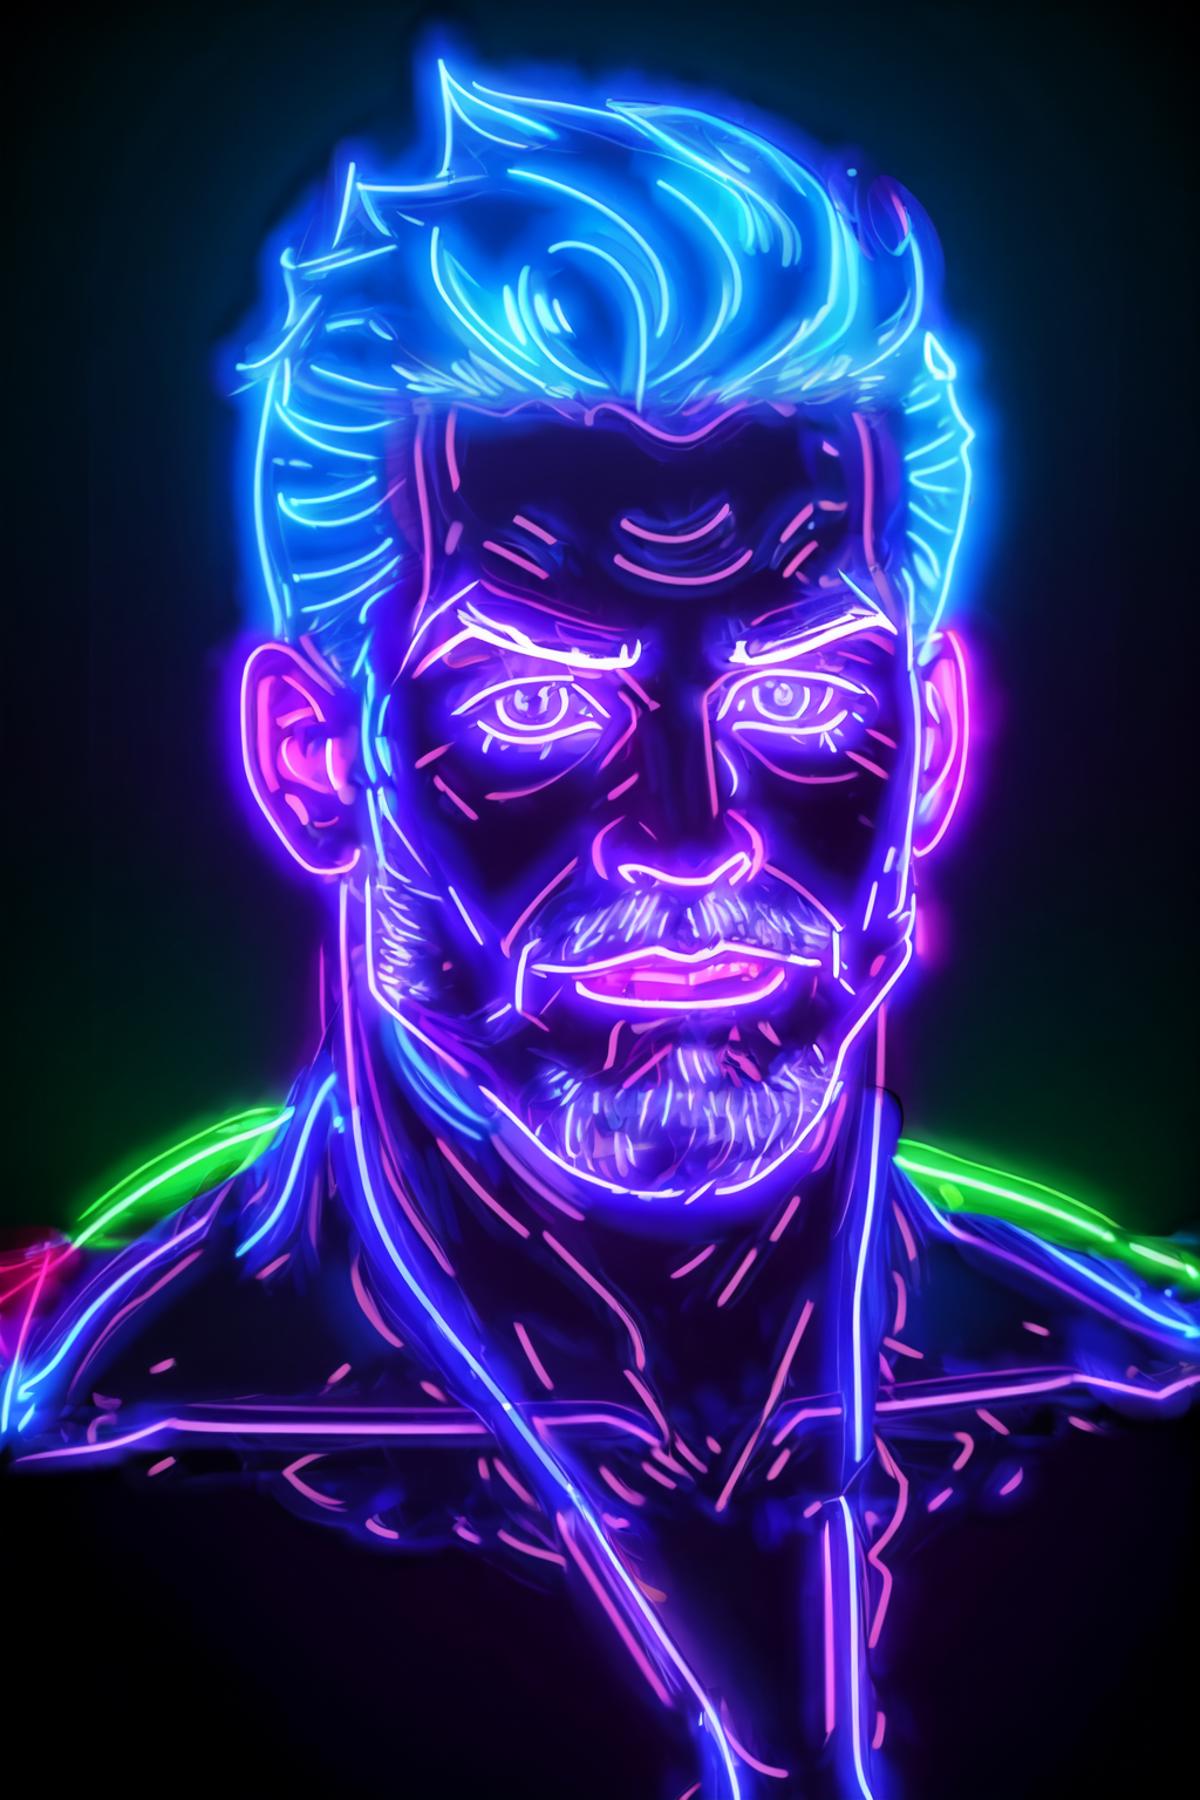 Neon Art image by SecretEGGNOG